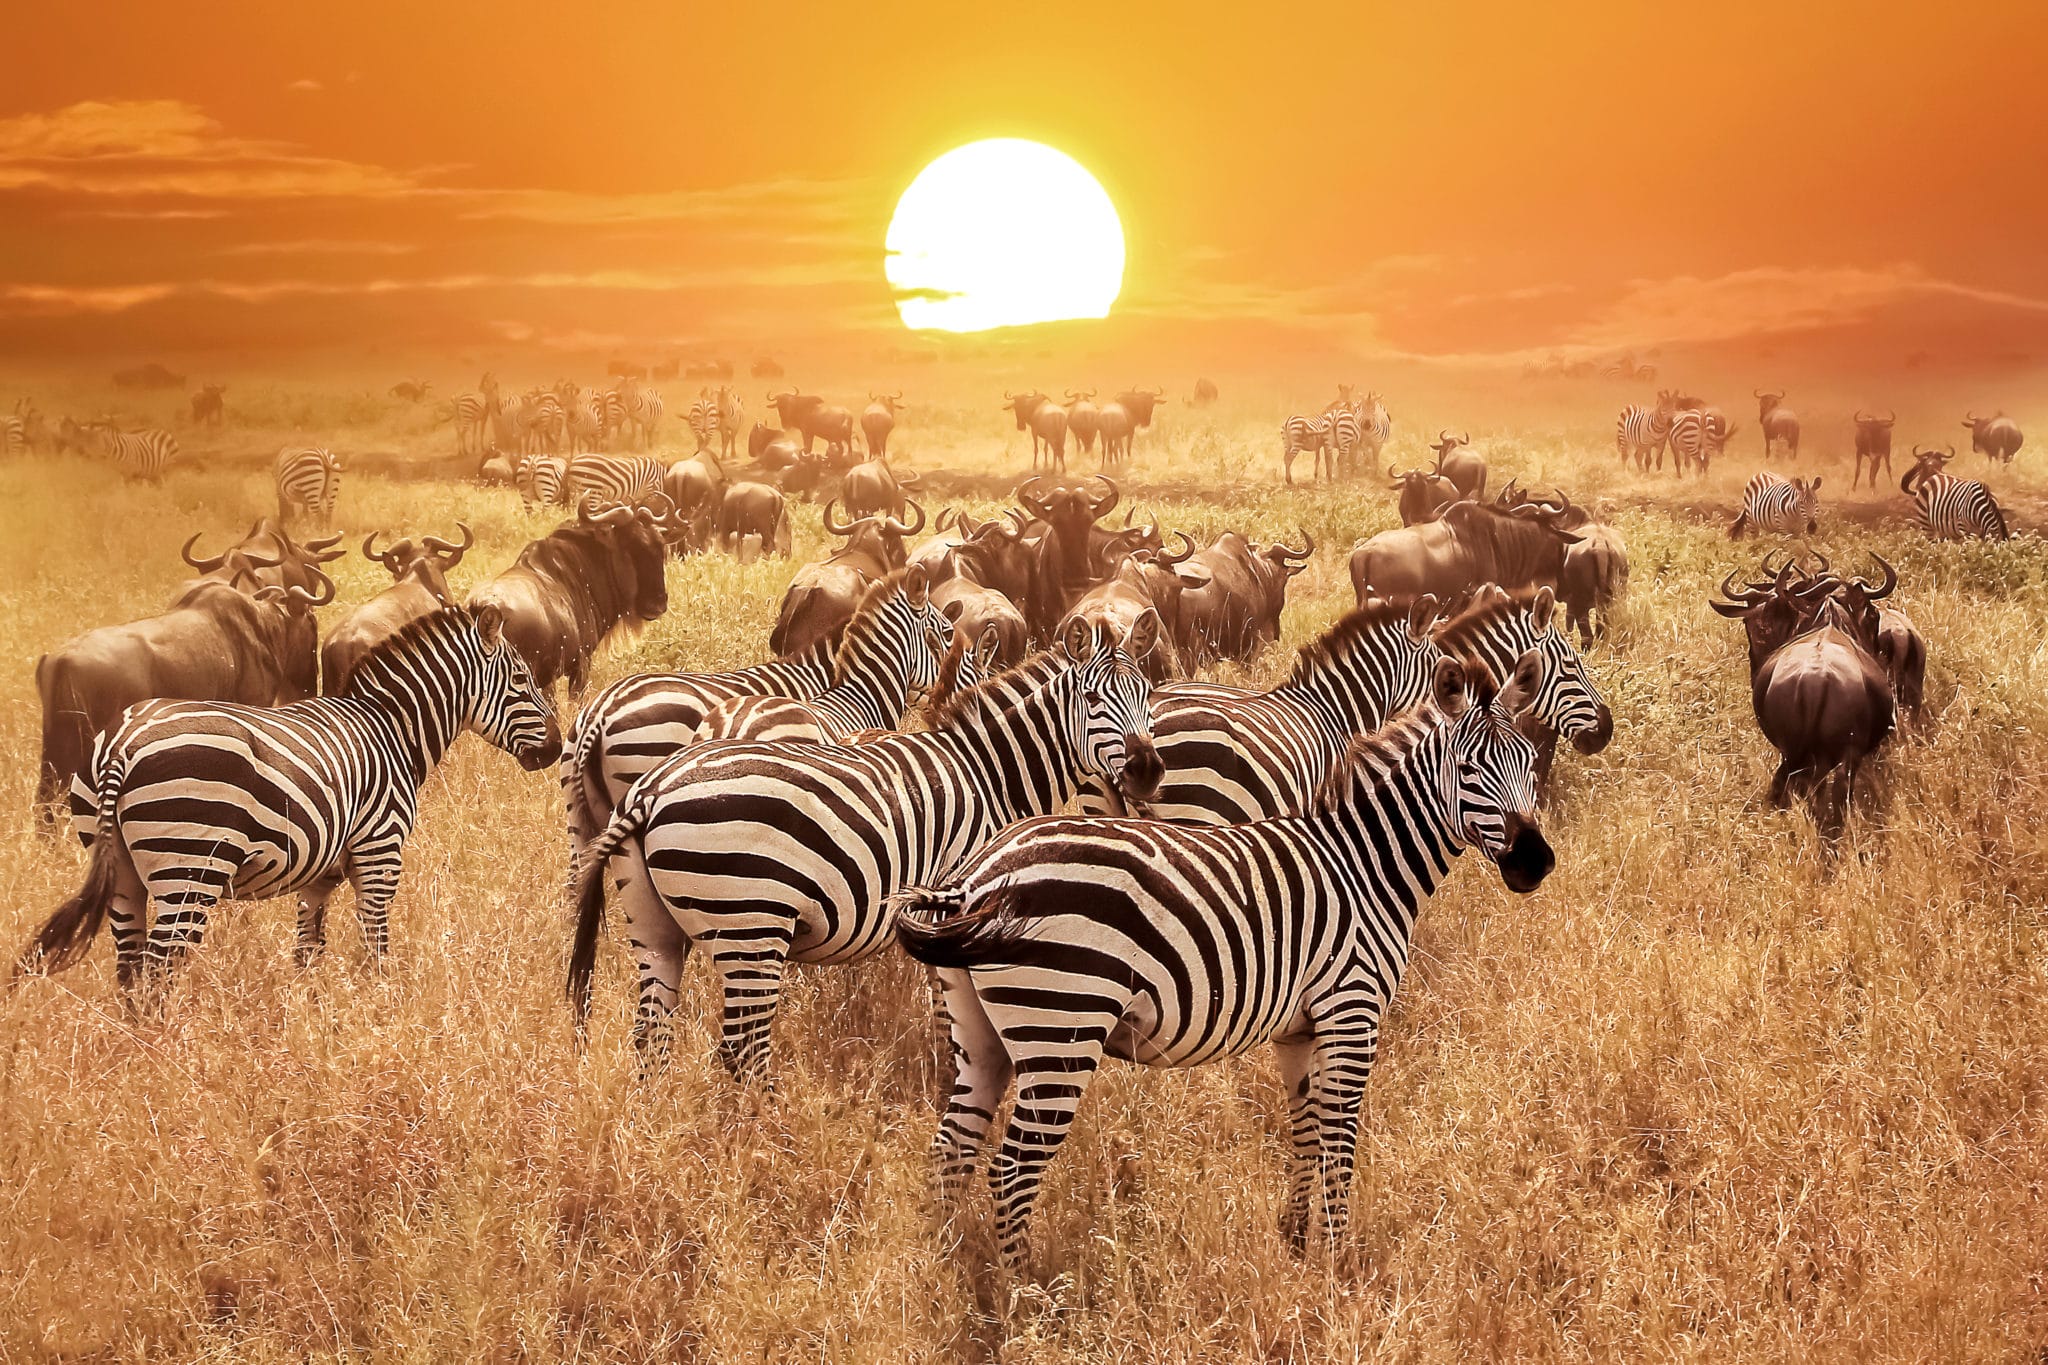 Tanzania Safari - What Animals Can Be Seen? | Bucket List Company